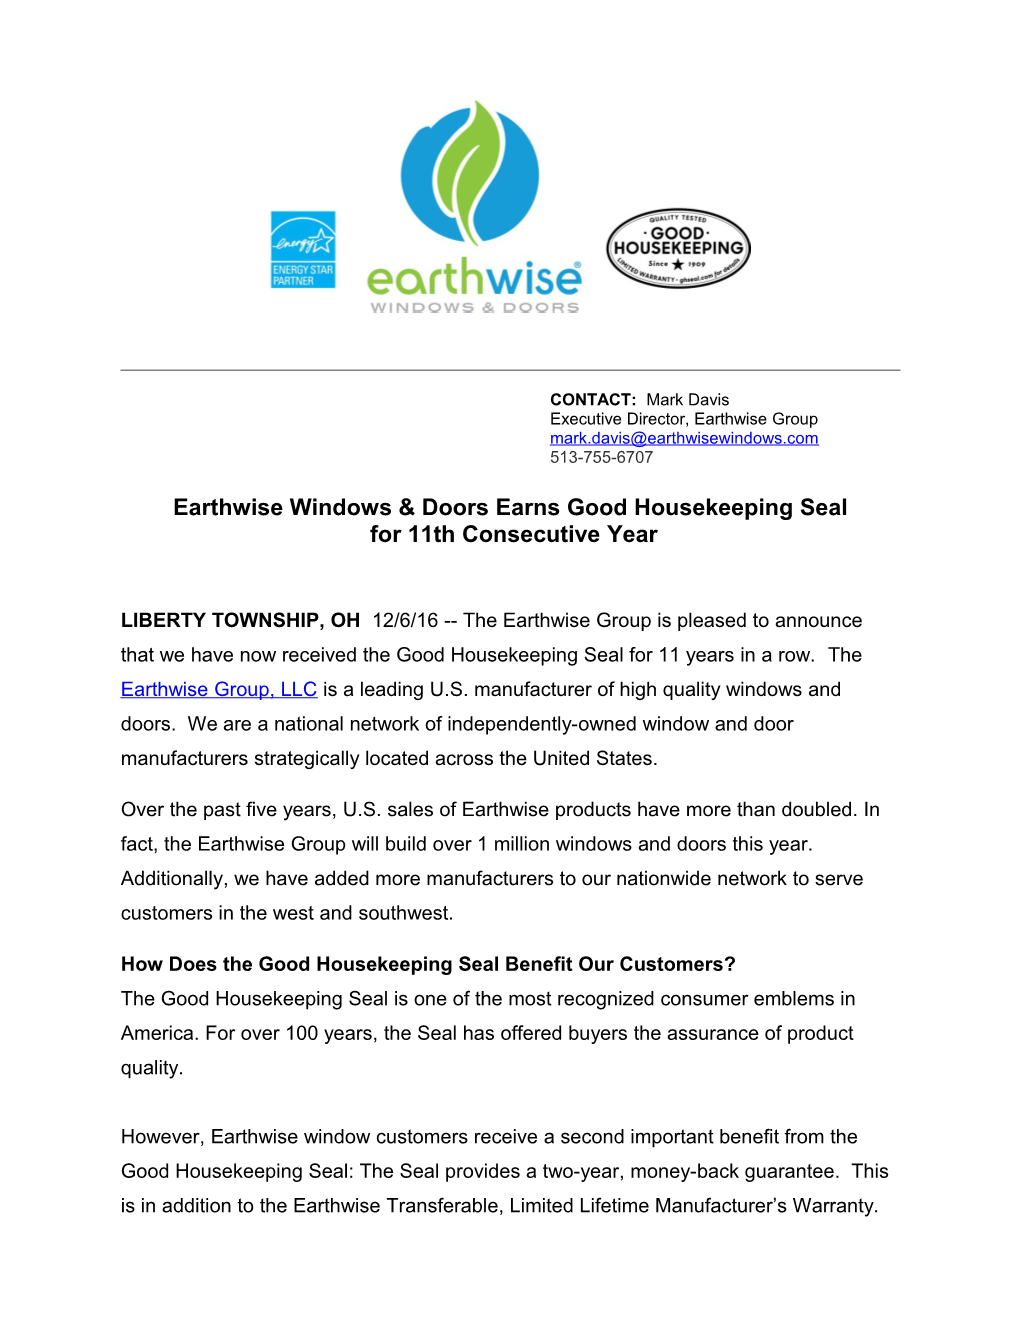 Earthwise Windows & Doors Earns Good Housekeeping Seal